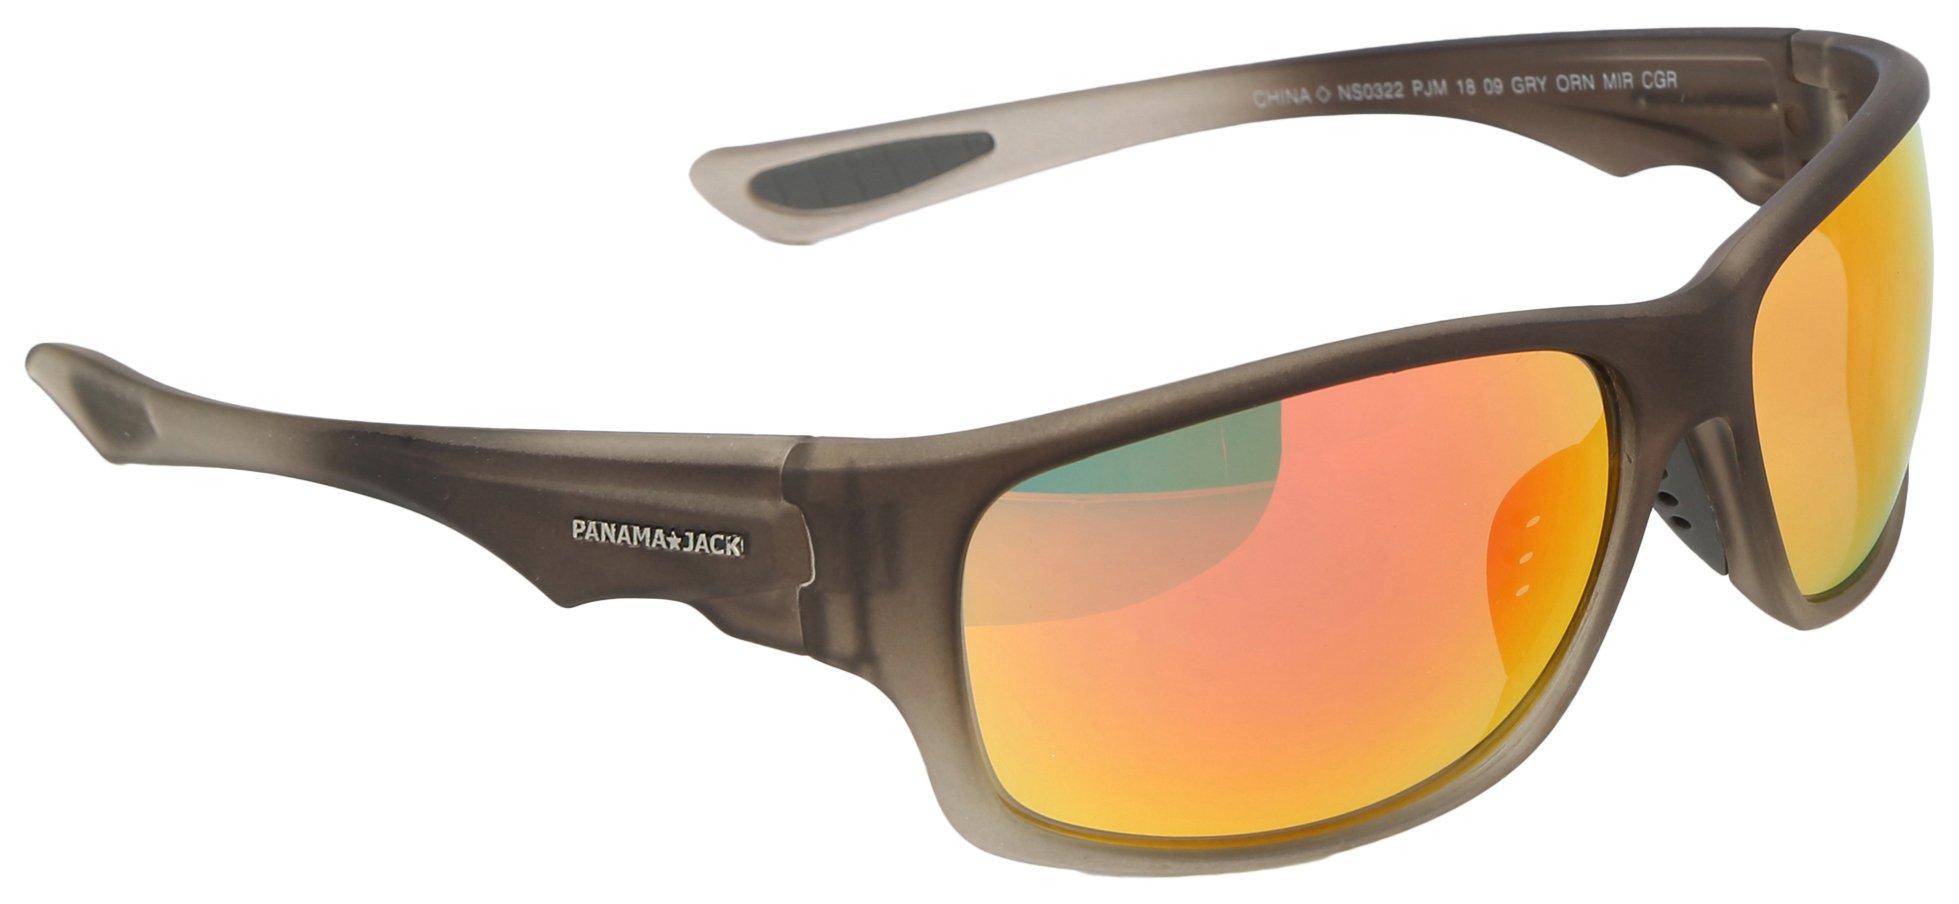 Panama Jack Mens Bamboo Mirror Sunglasses